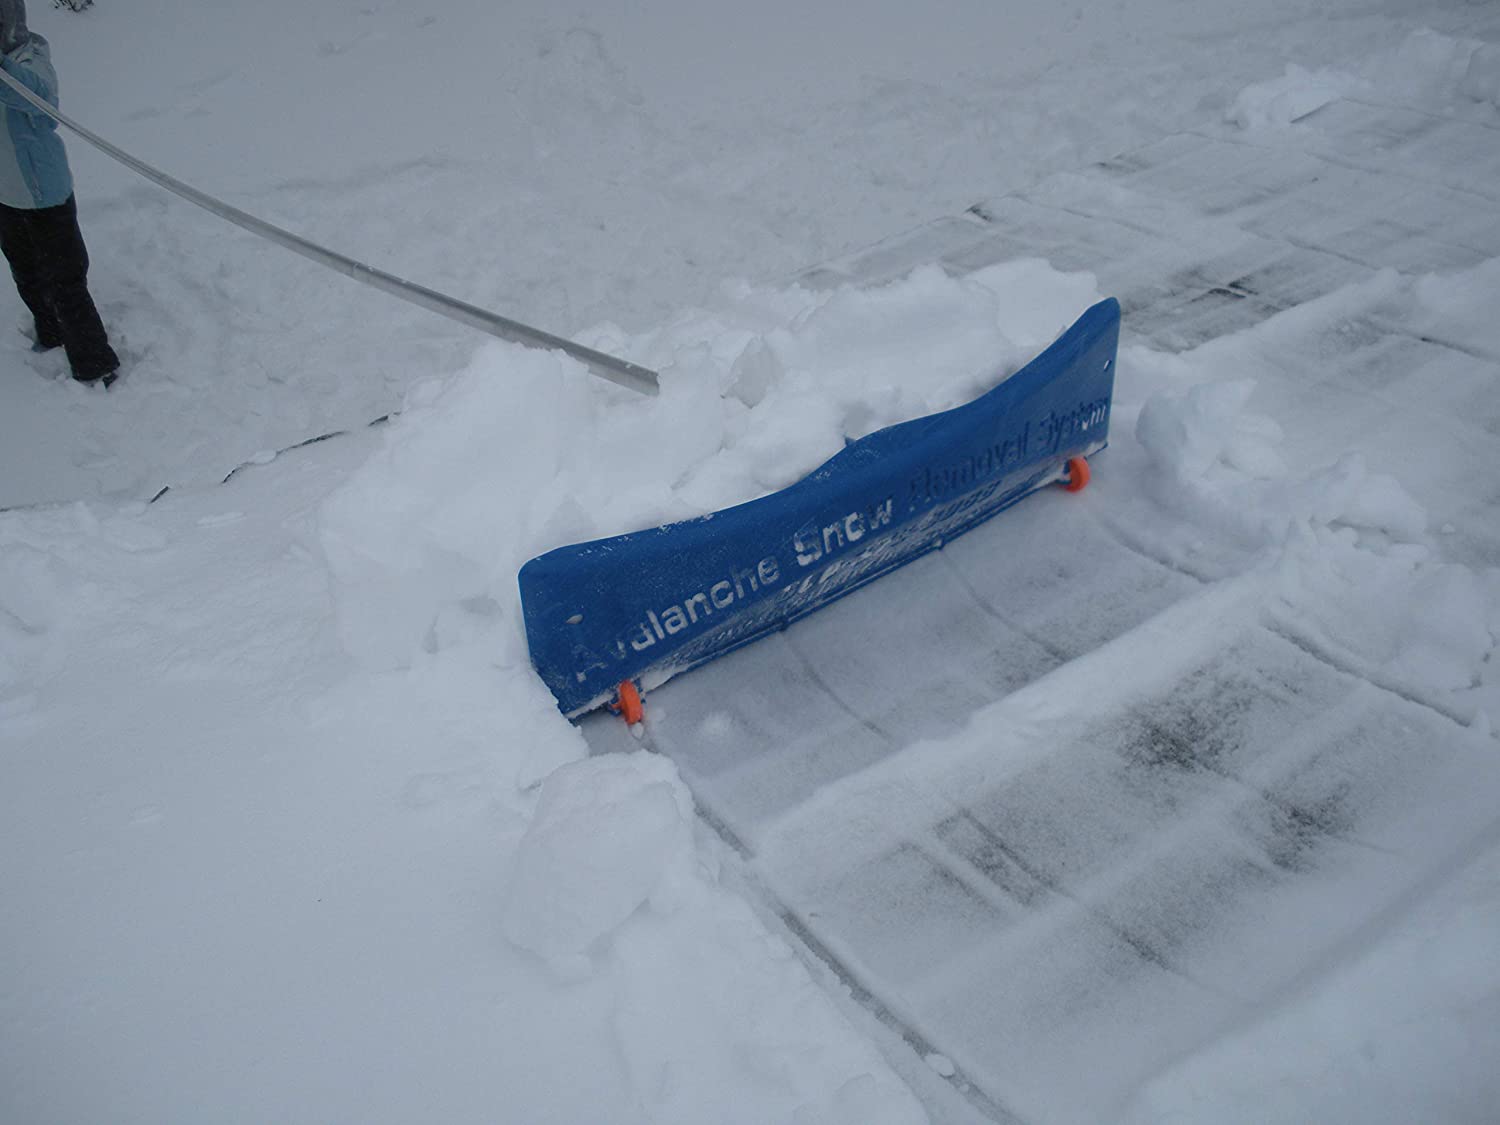 usando avalancha!  Rastrillo de techo de nieve tradicional